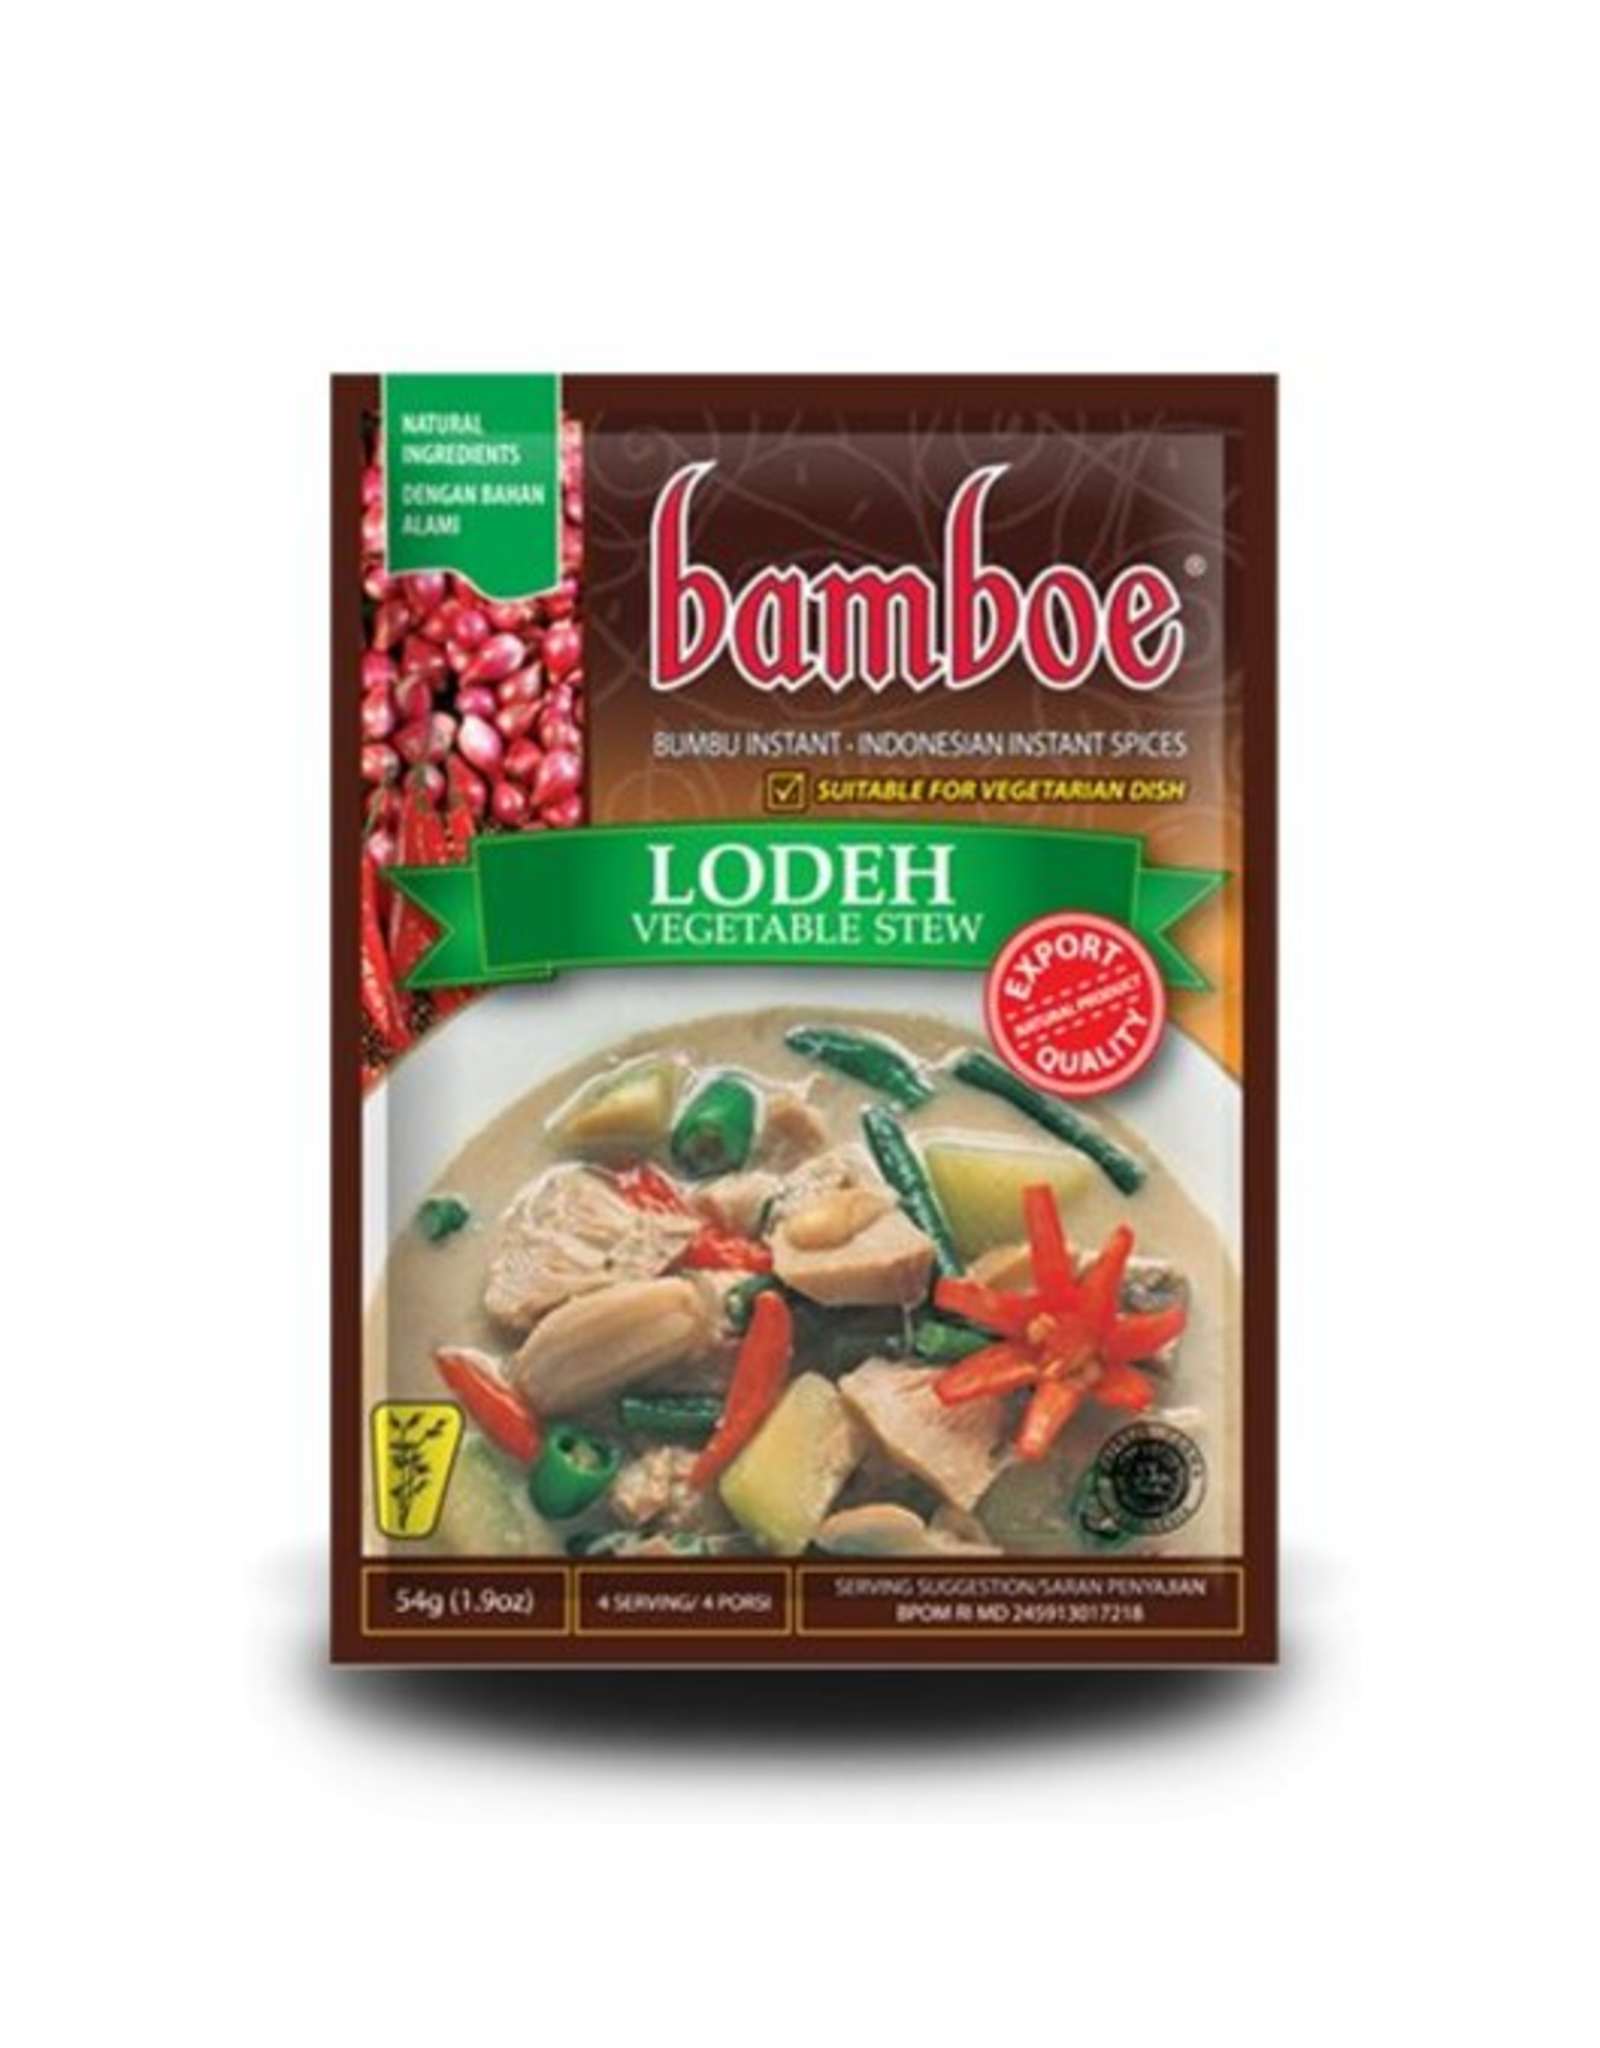 Boemboe Bamboe Lodeh